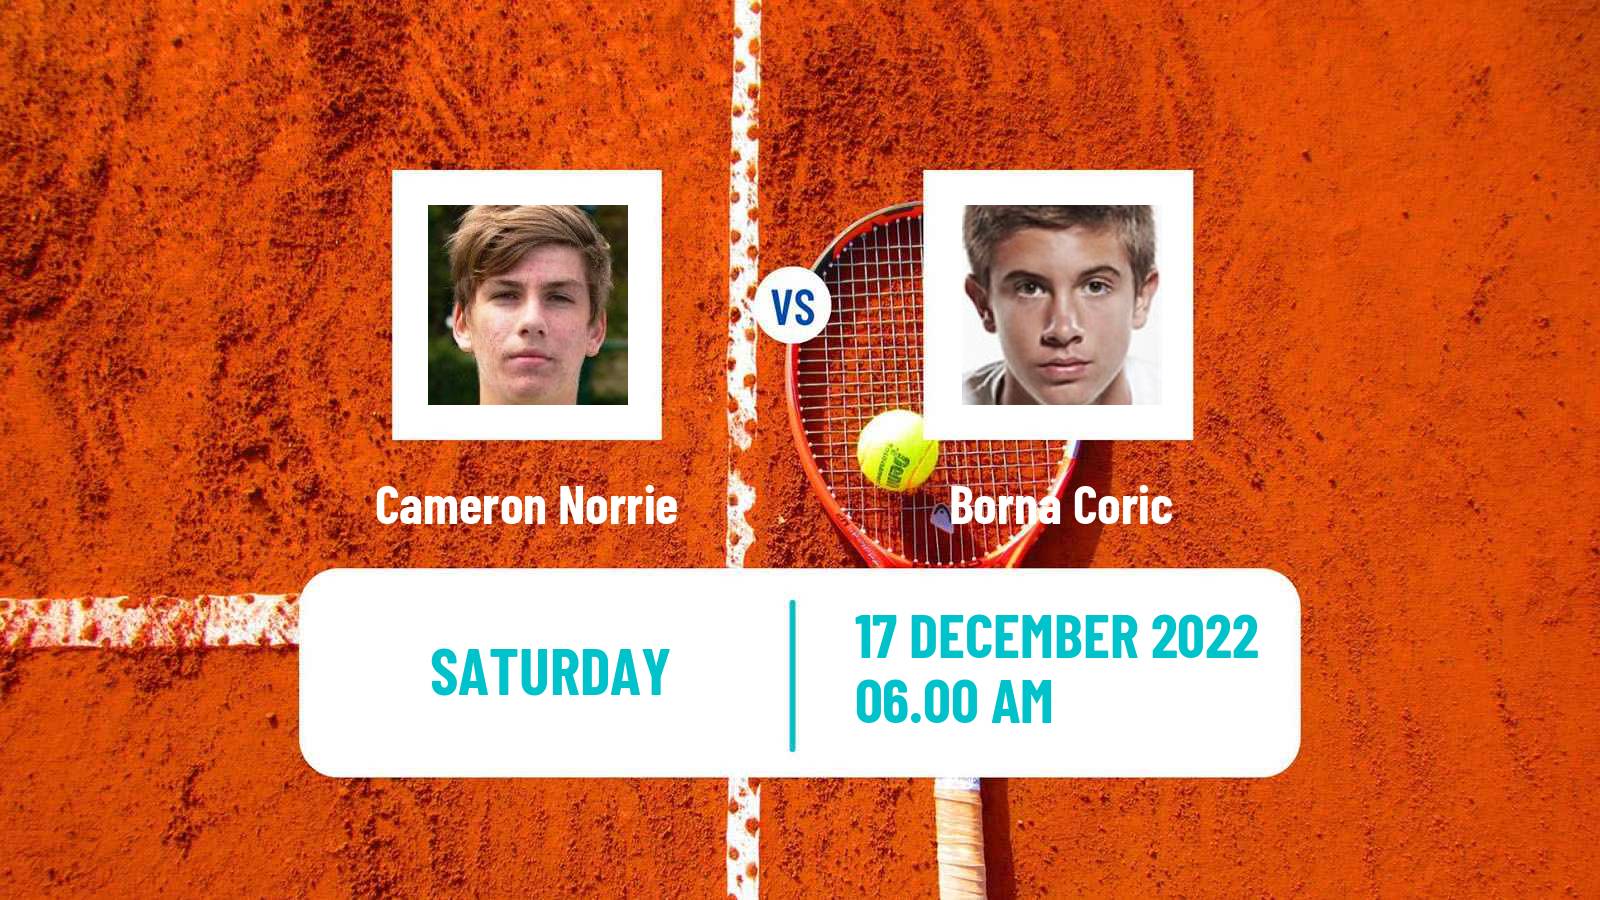 Tennis Exhibition World Tennis Championship Cameron Norrie - Borna Coric